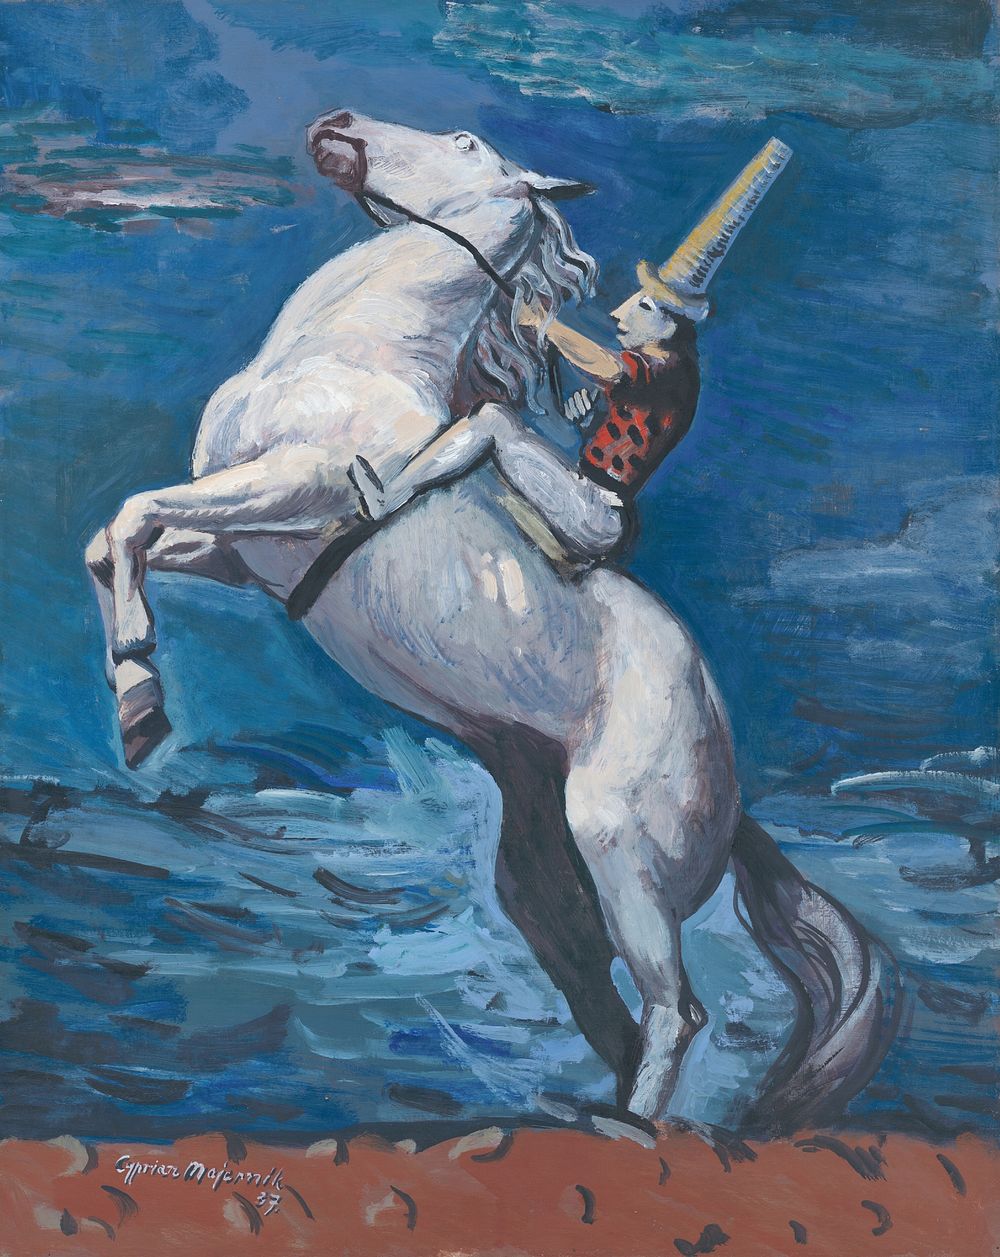 Rider by seashore by Cyprián Majerník